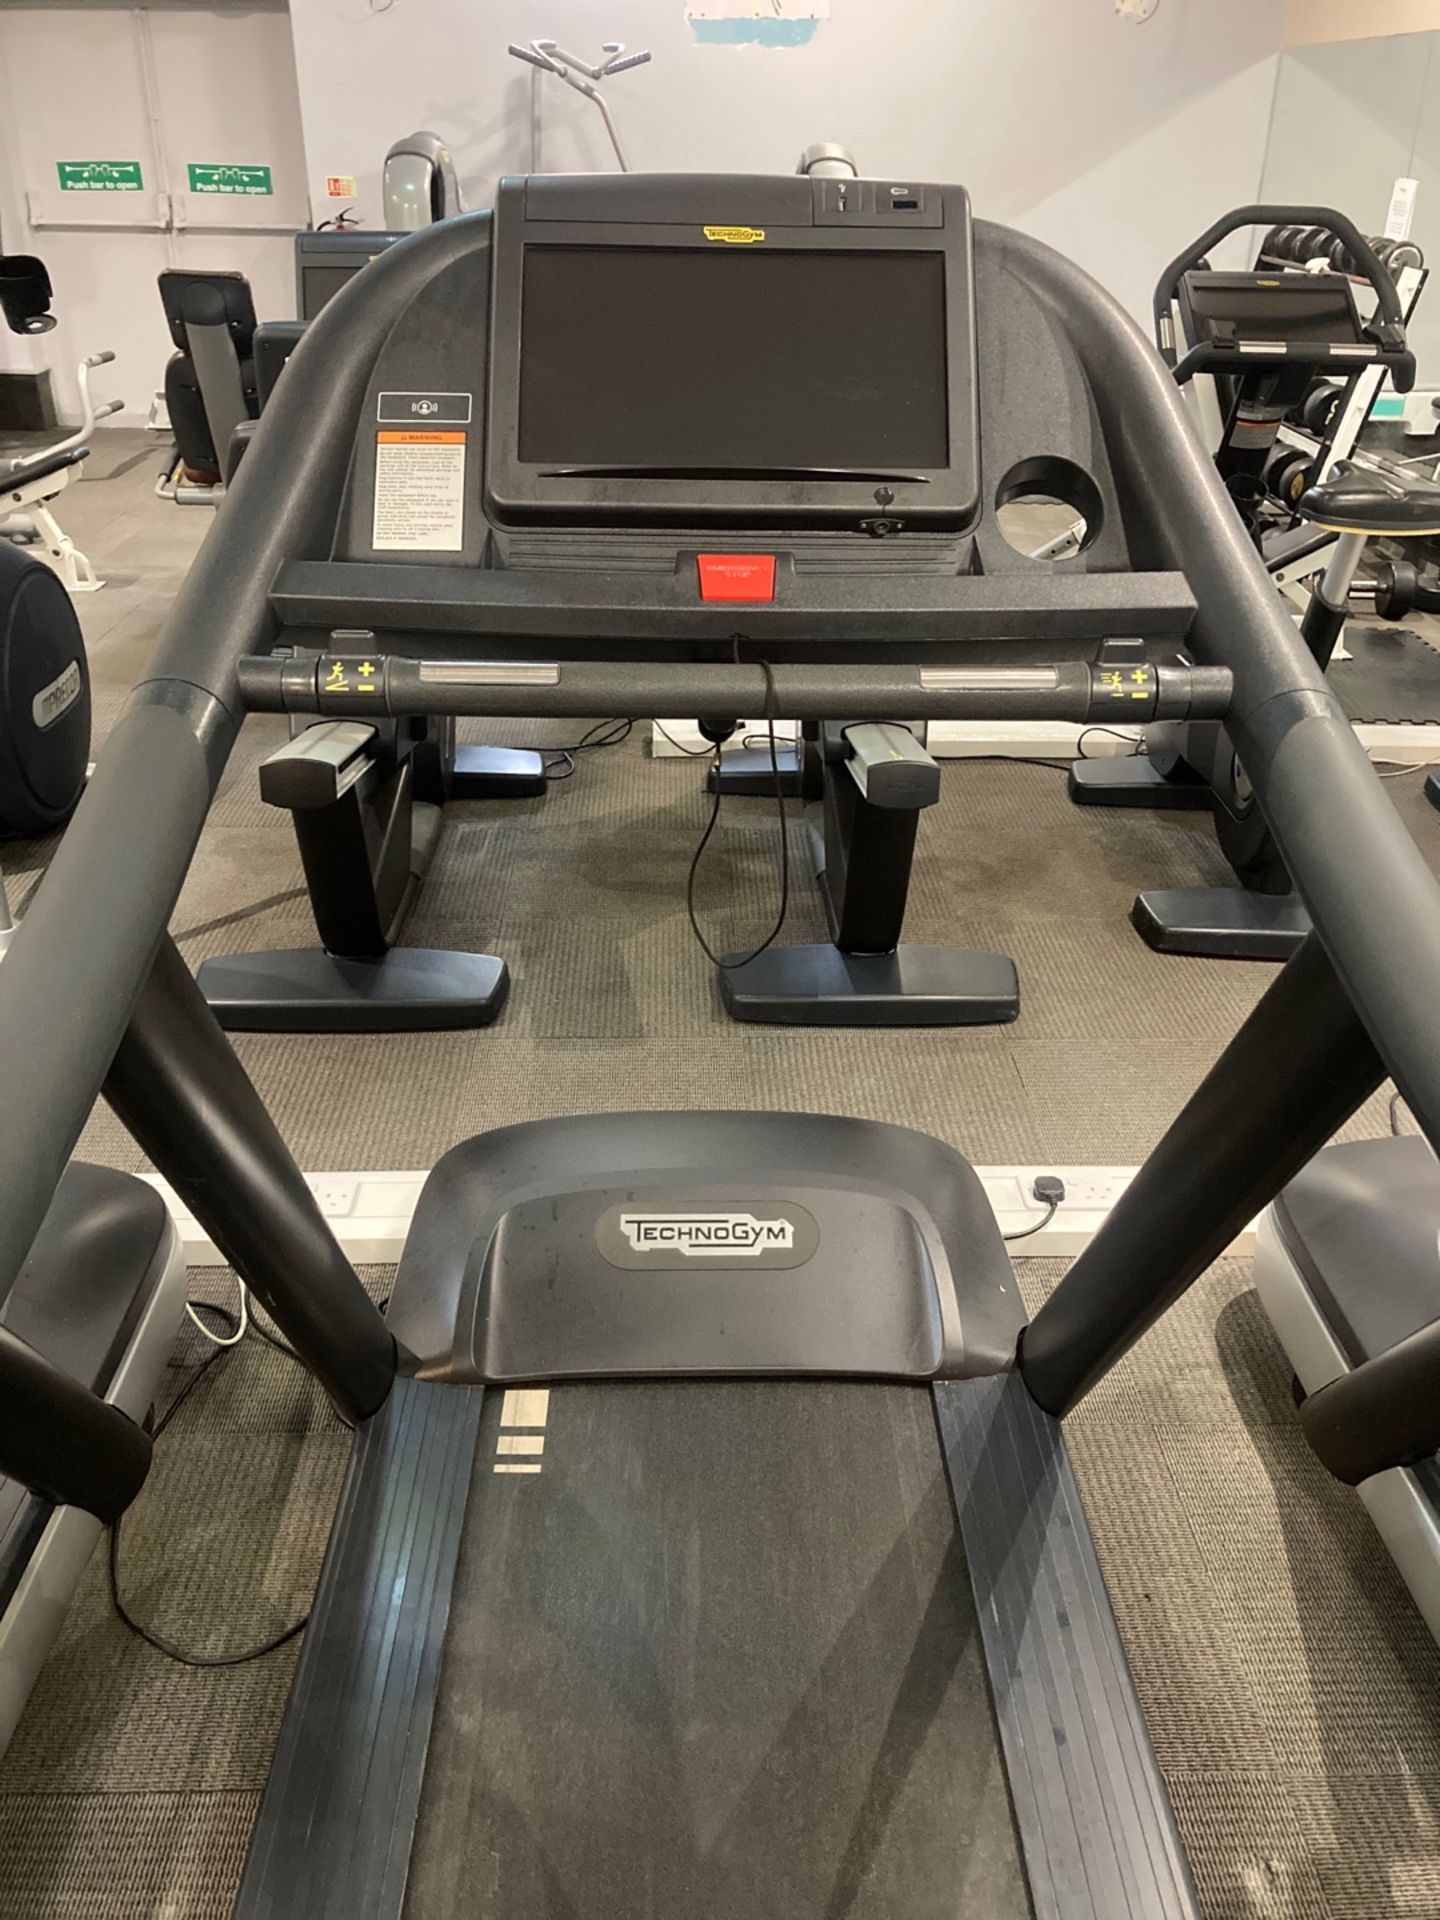 Techno Gym Fitness Treadmill - Image 2 of 5